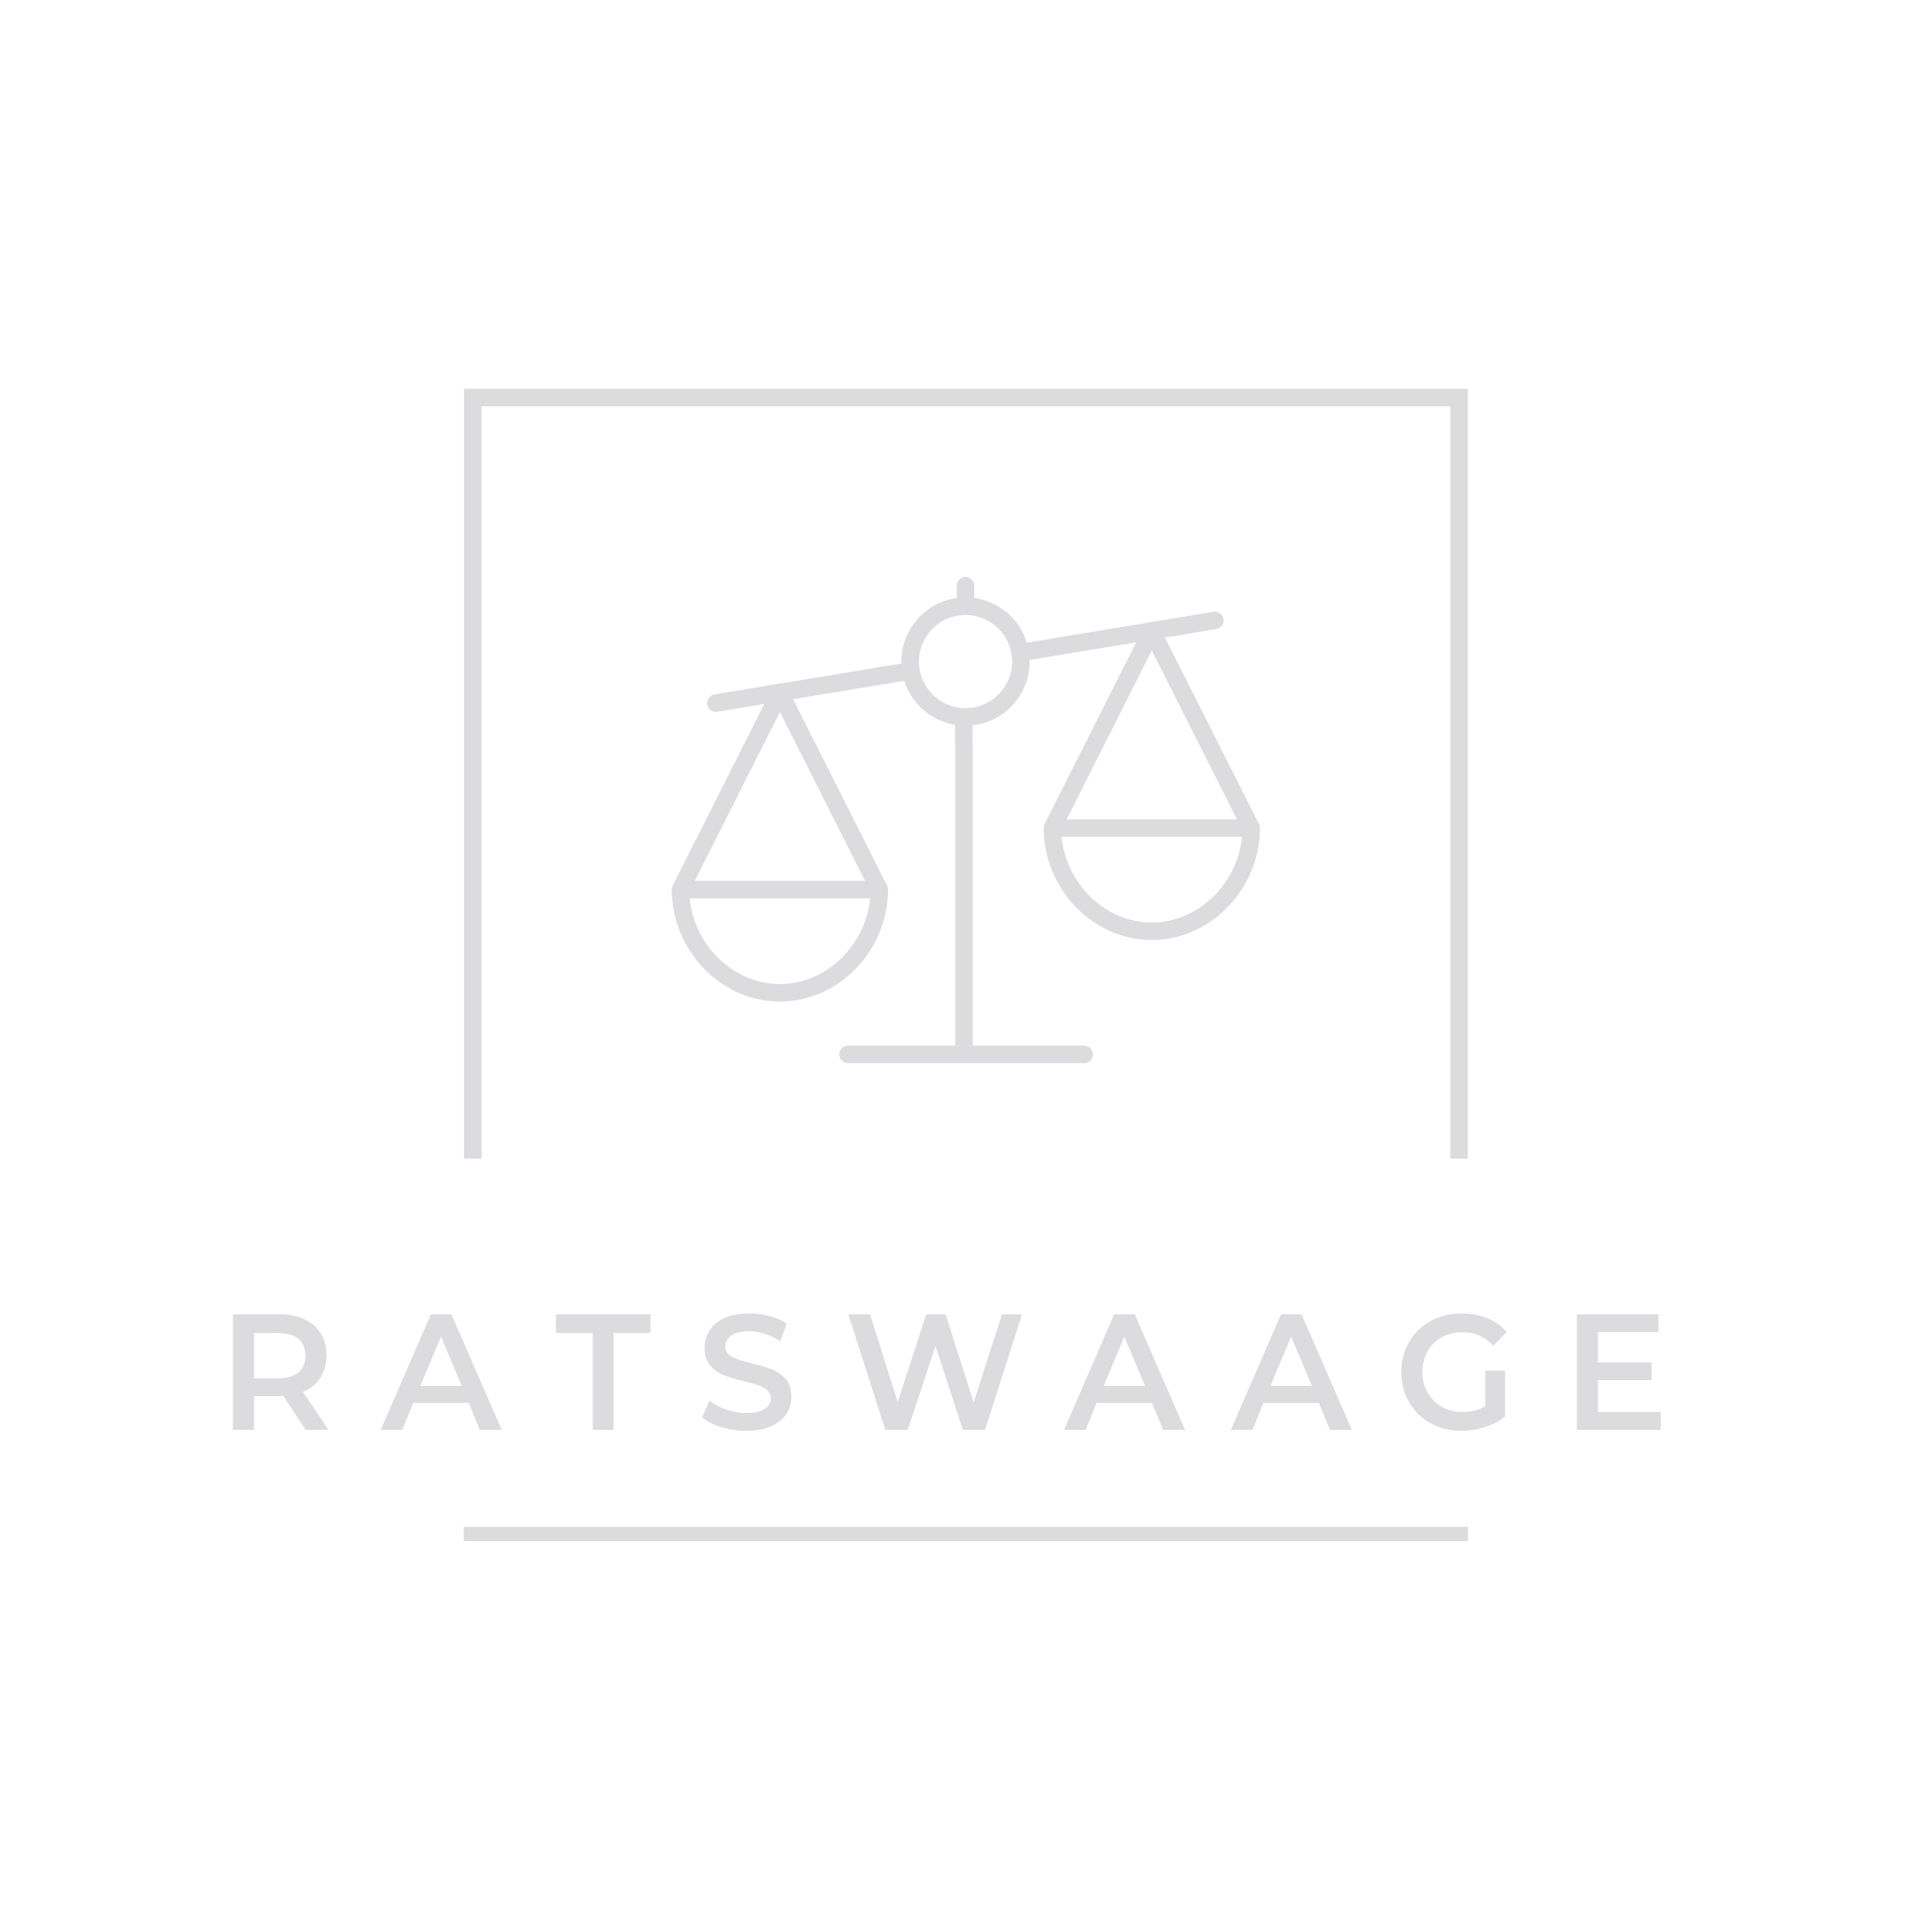 Ratswaage Logo